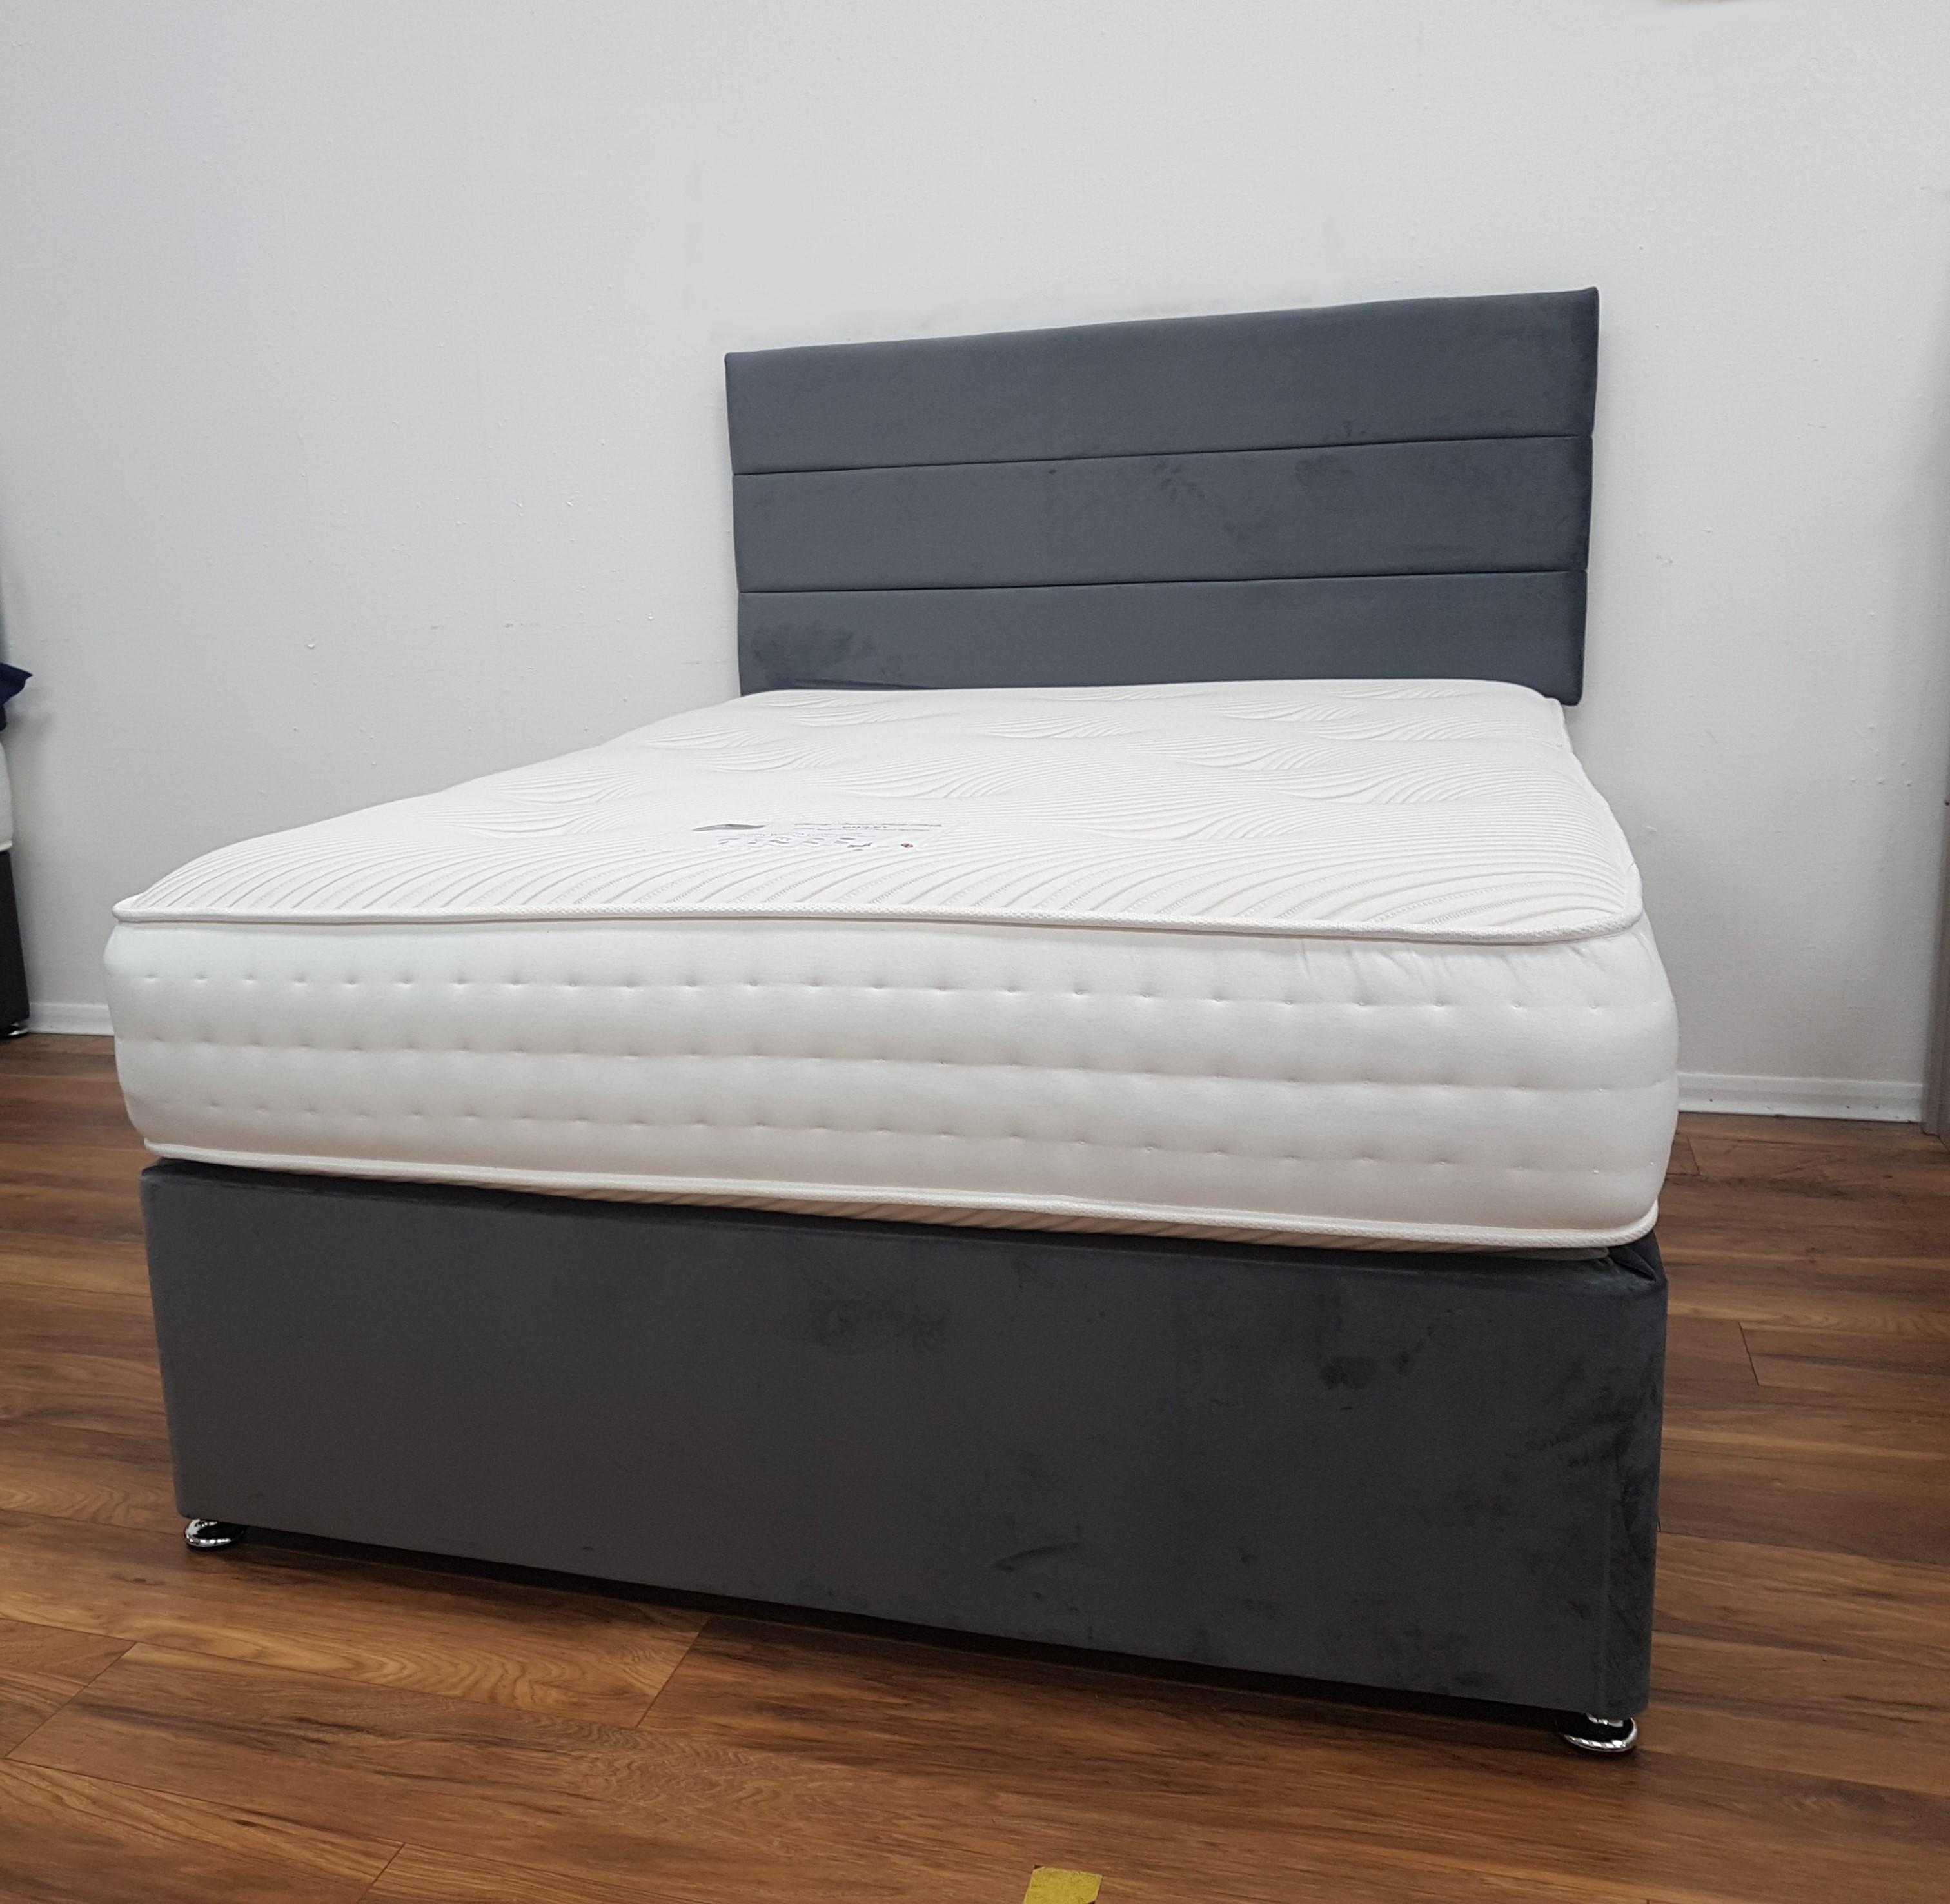 Ripley 2000 pocket sprung mattress